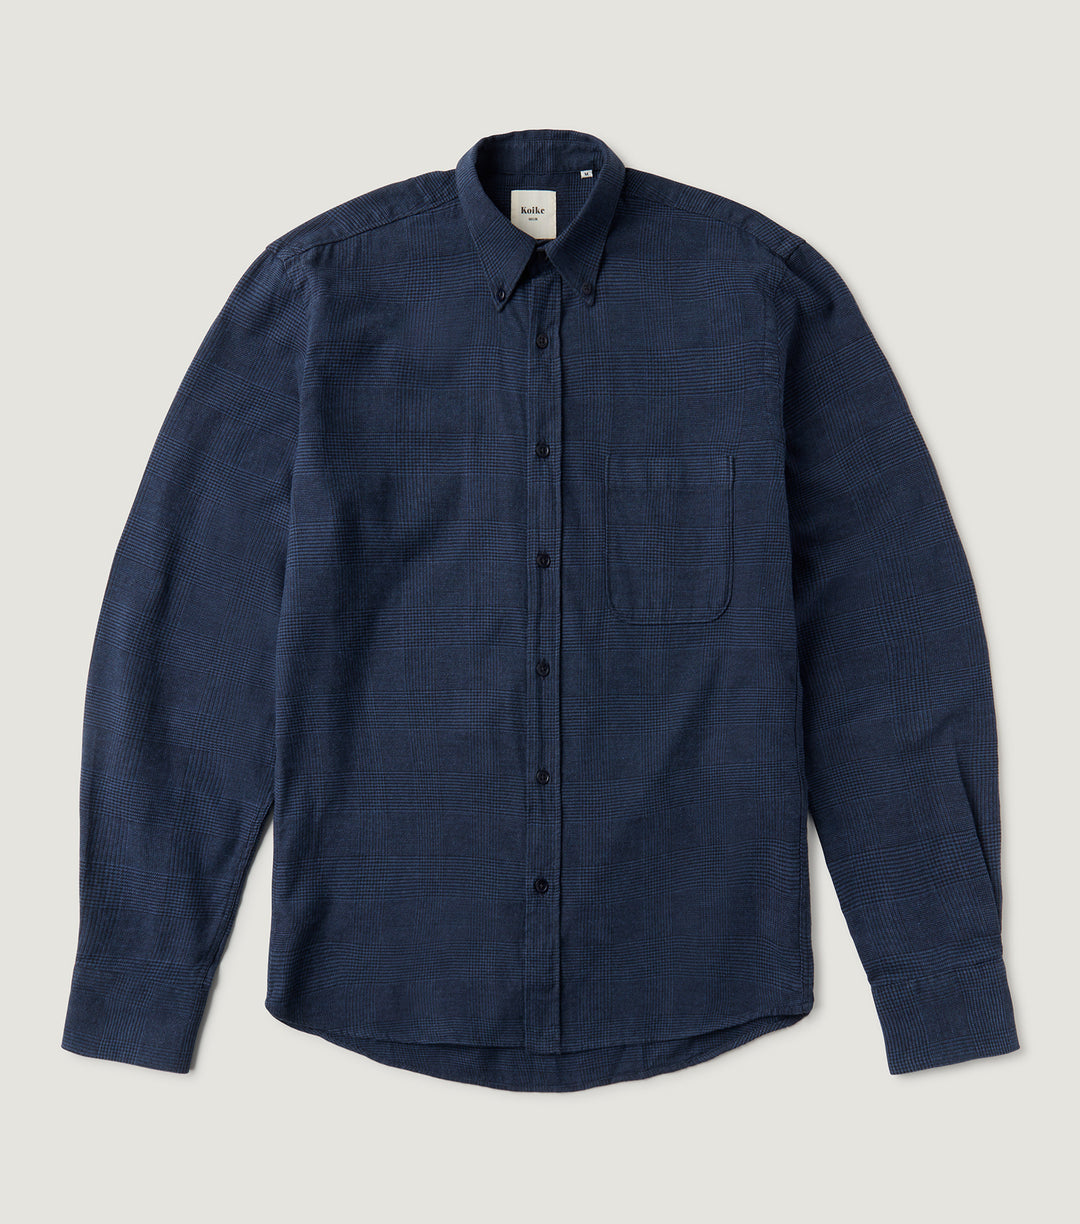 Checked Flannel Shirt Navy - Koike